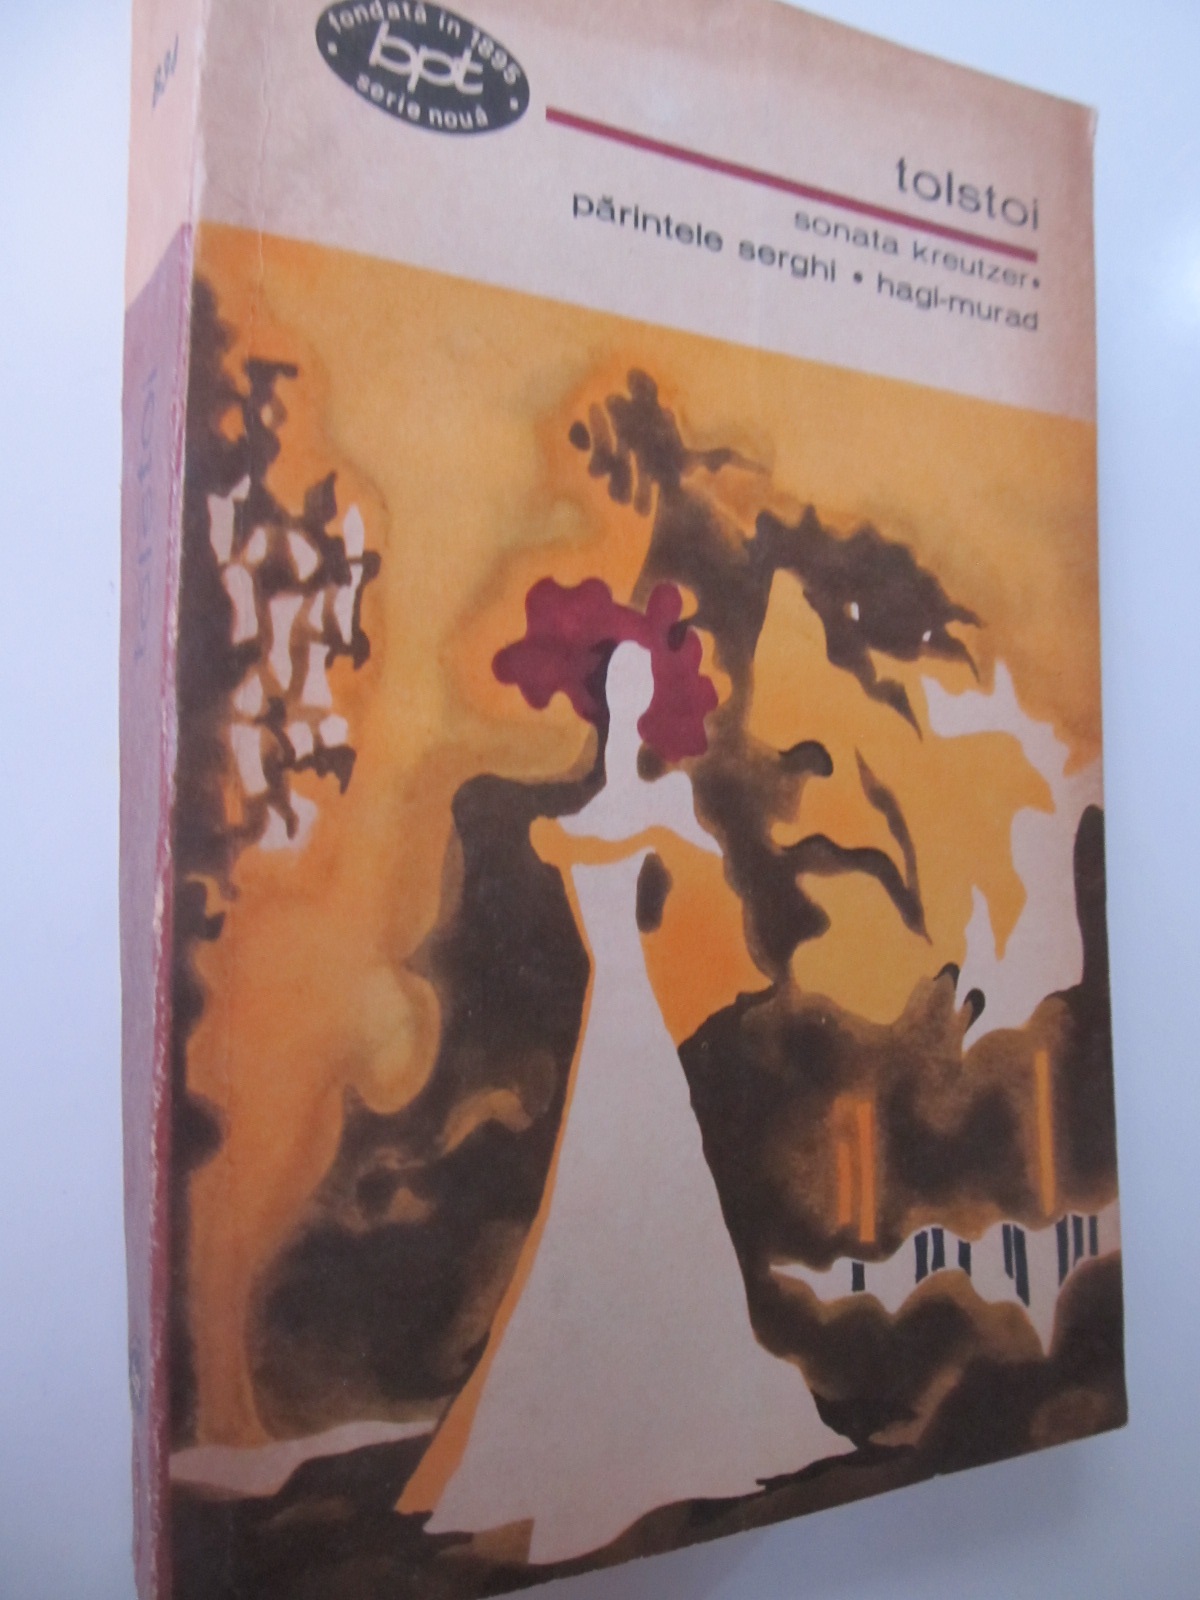 Sonata Kreutzer , Parintele Serghi , Hagi Murad - Tolstoi | Detalii carte